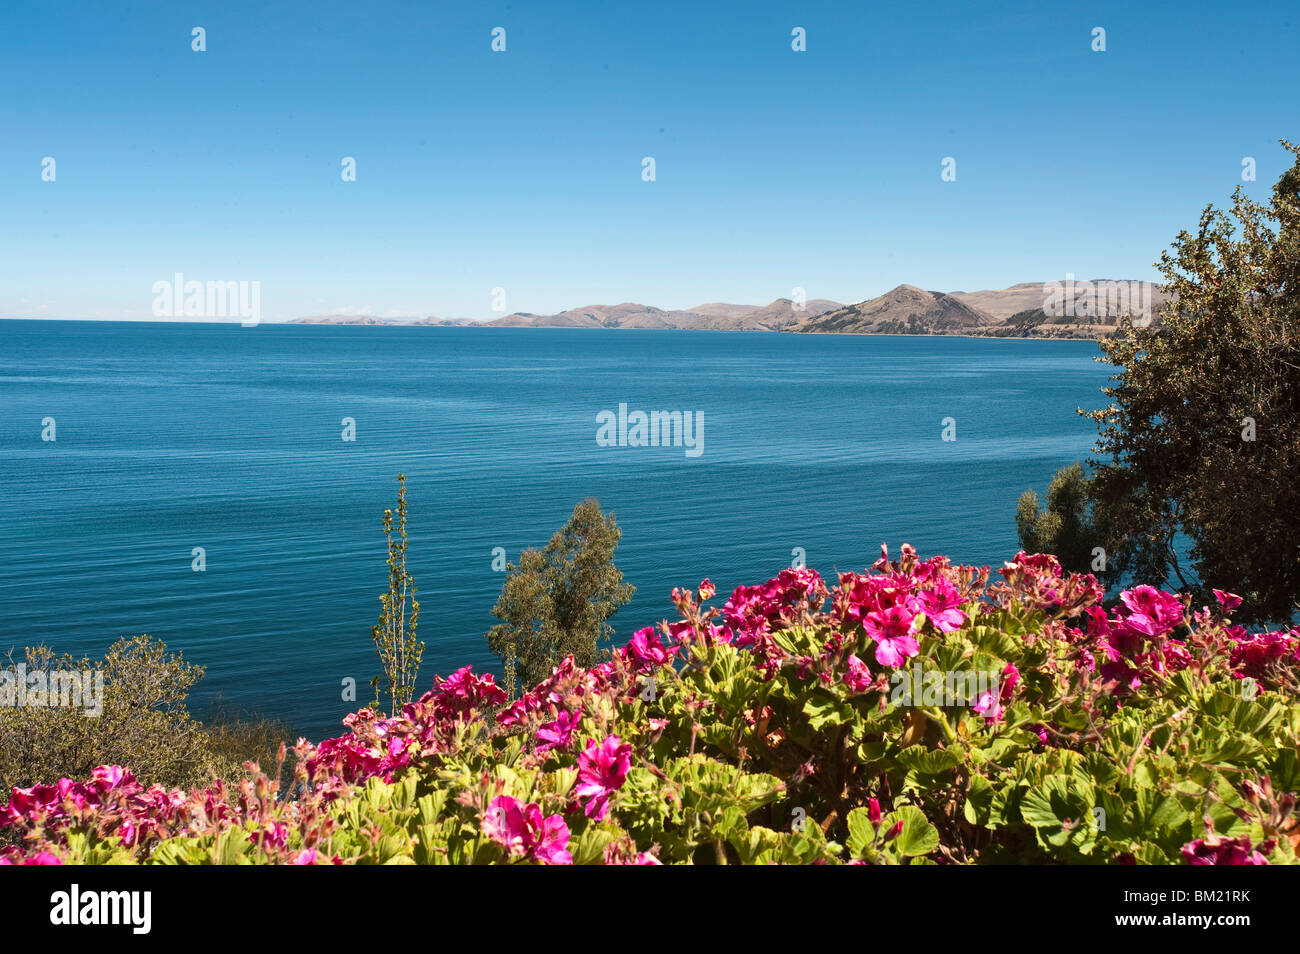 Suasi Island, Lake Titicaca, Peru, South America Stock Photo